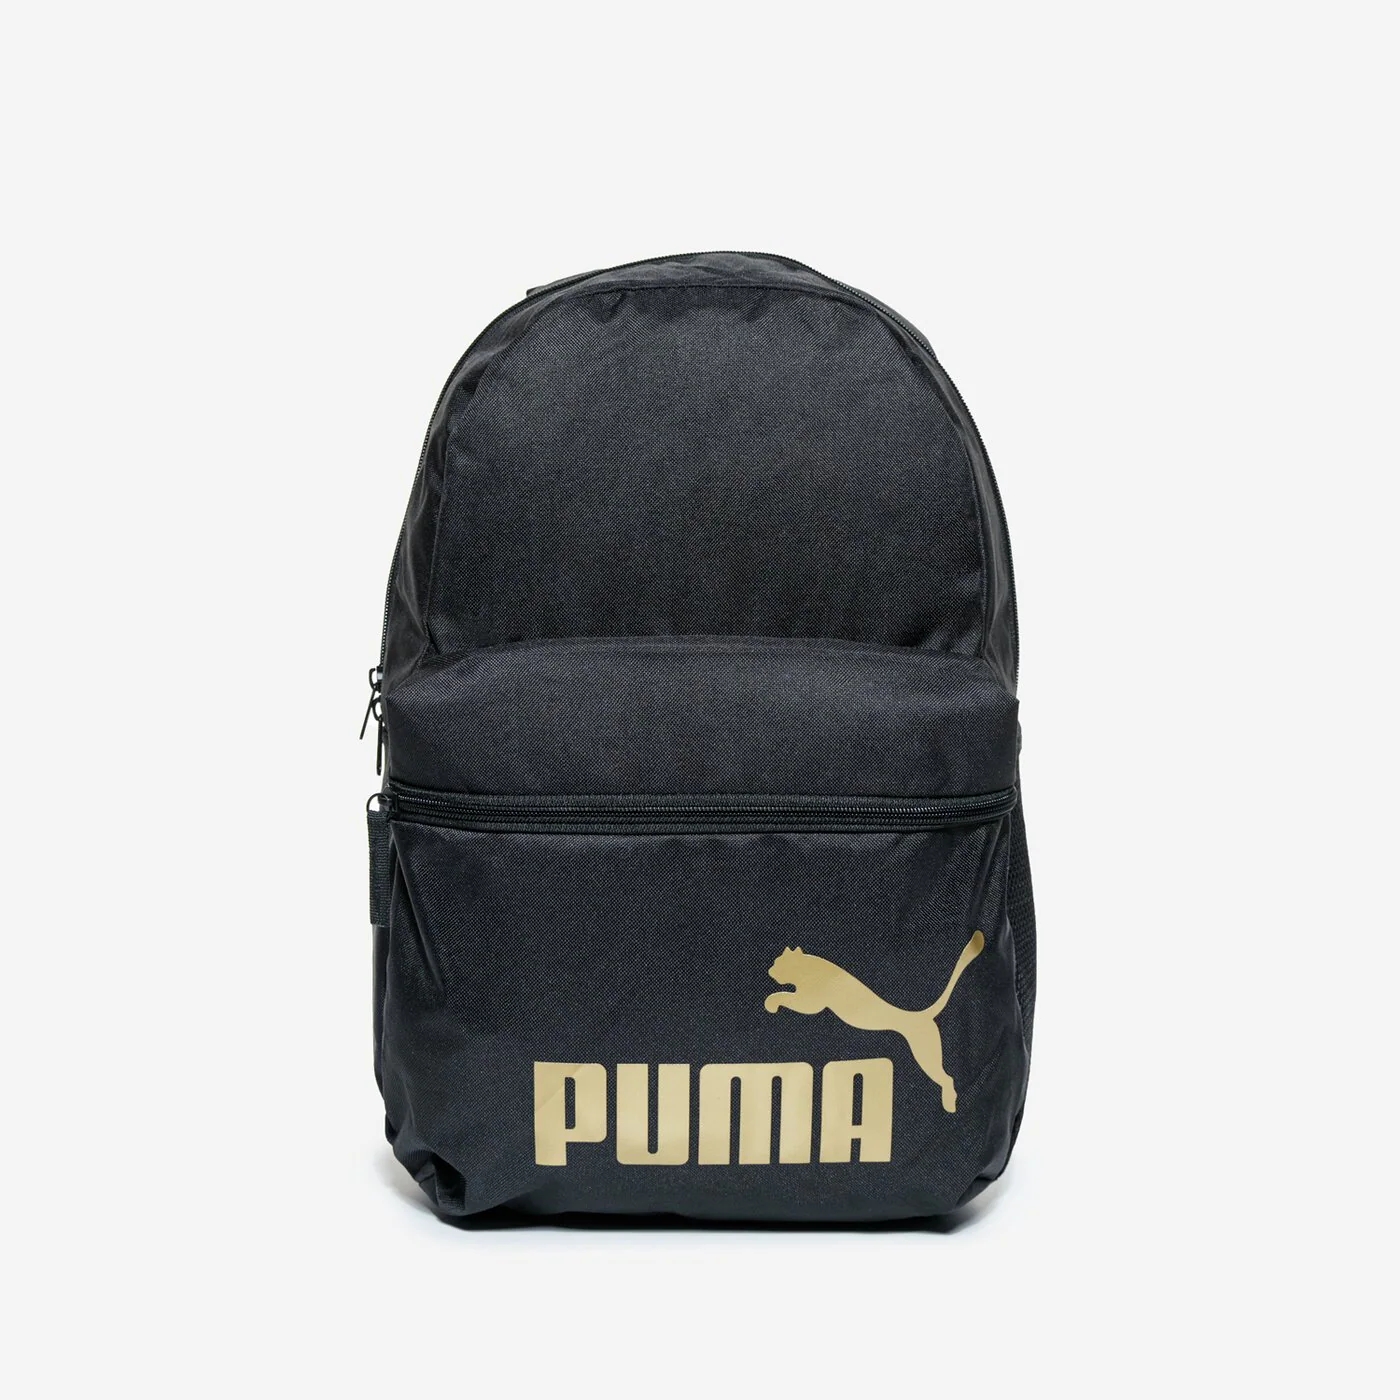 Рюкзак Puma Phase, черный